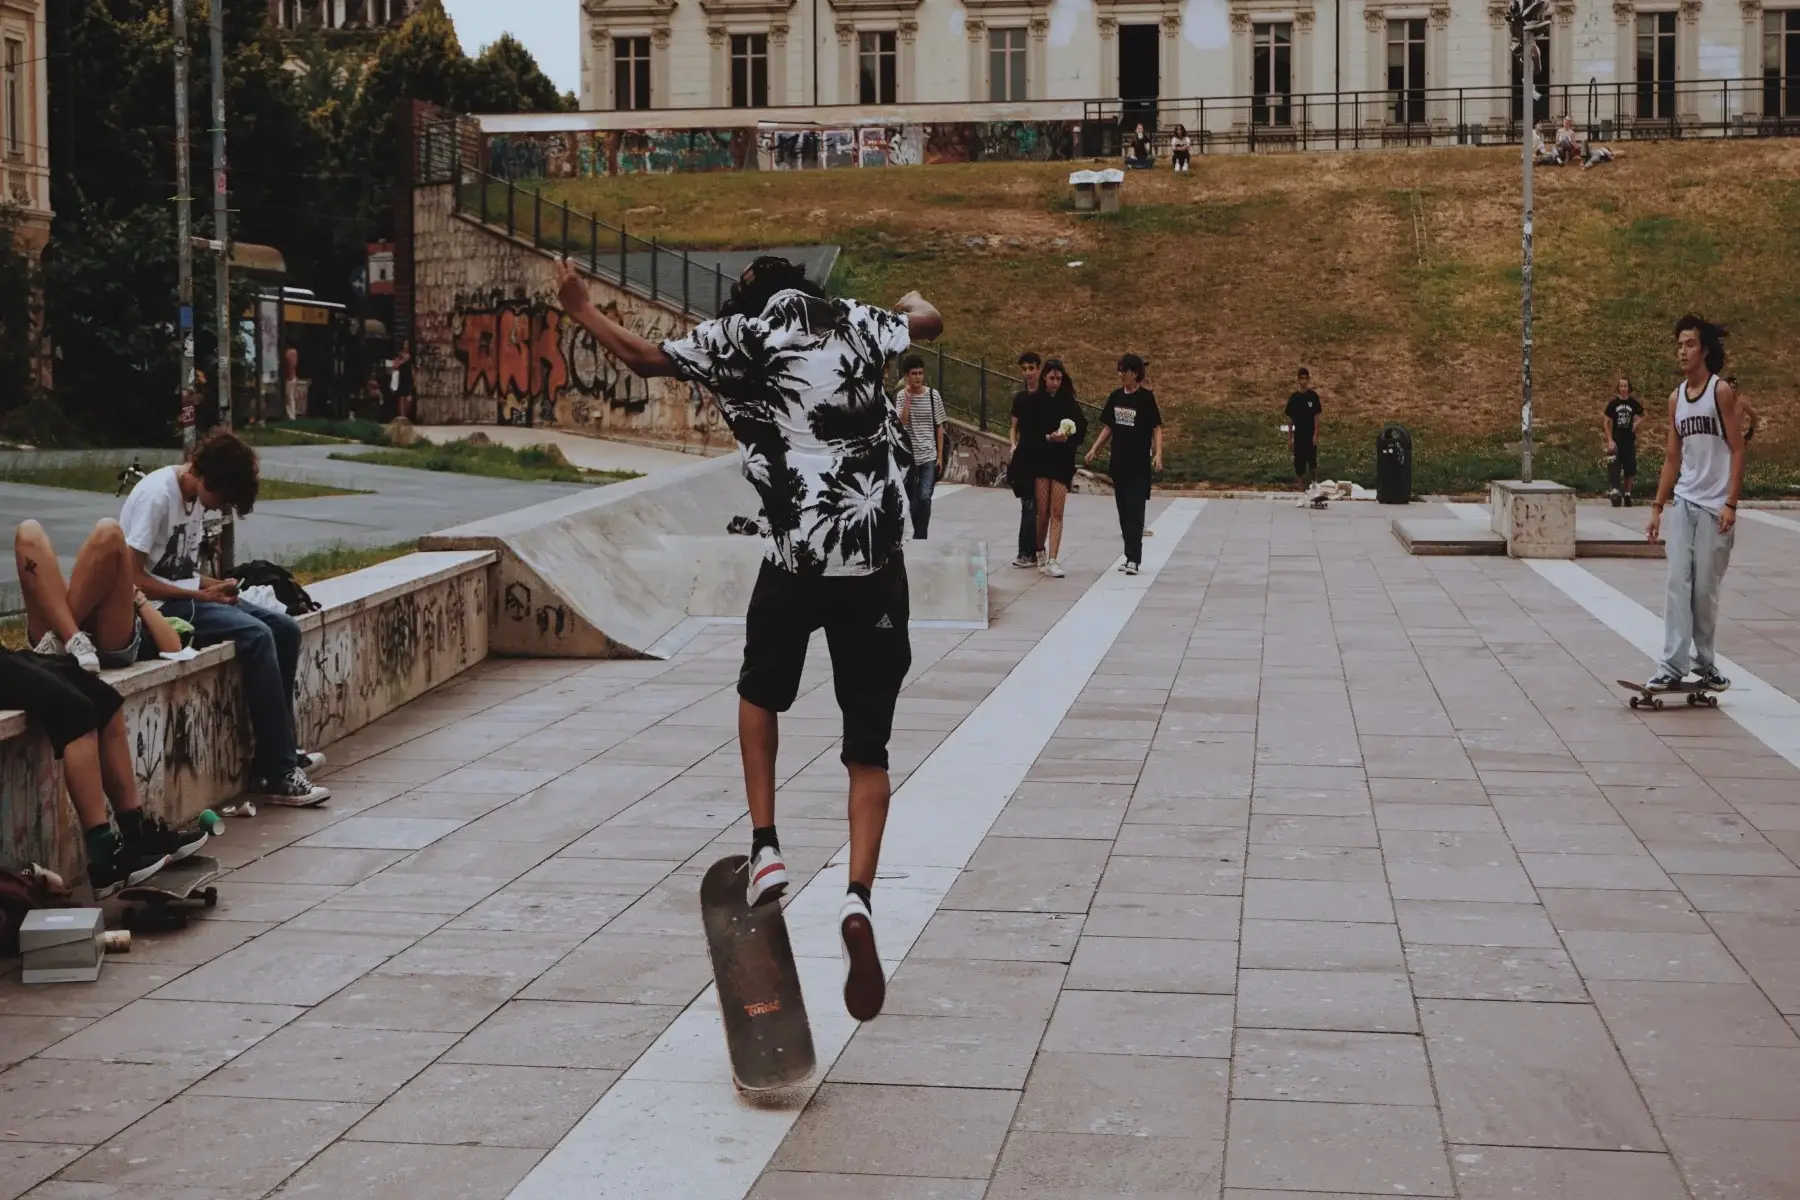 Skateboarders doing tricks in Torino